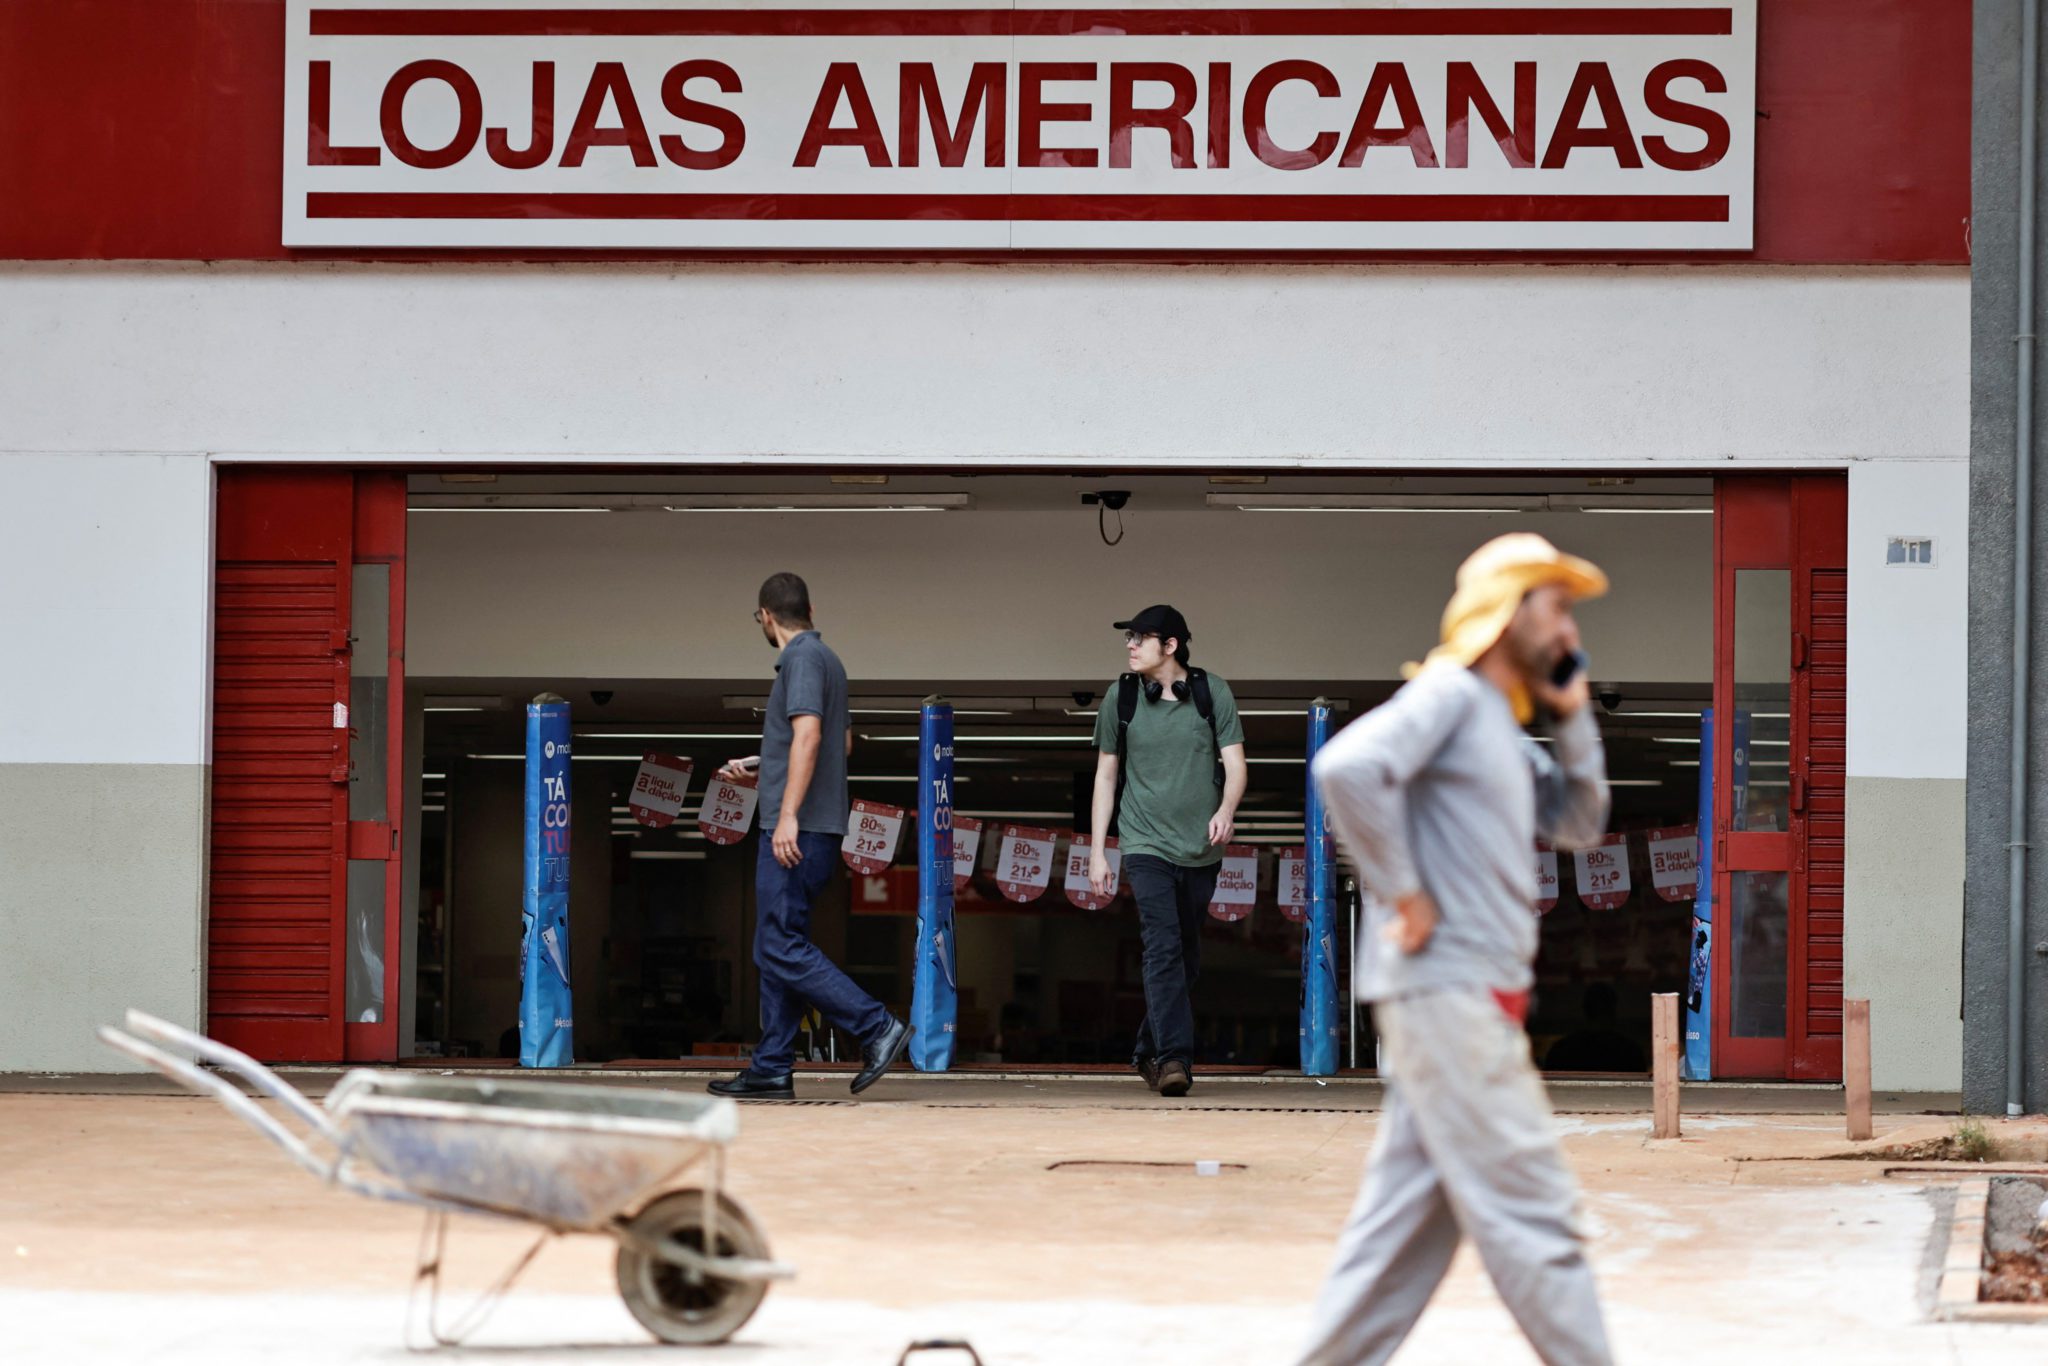 Americanas: notícias sobre as Lojas Americanas